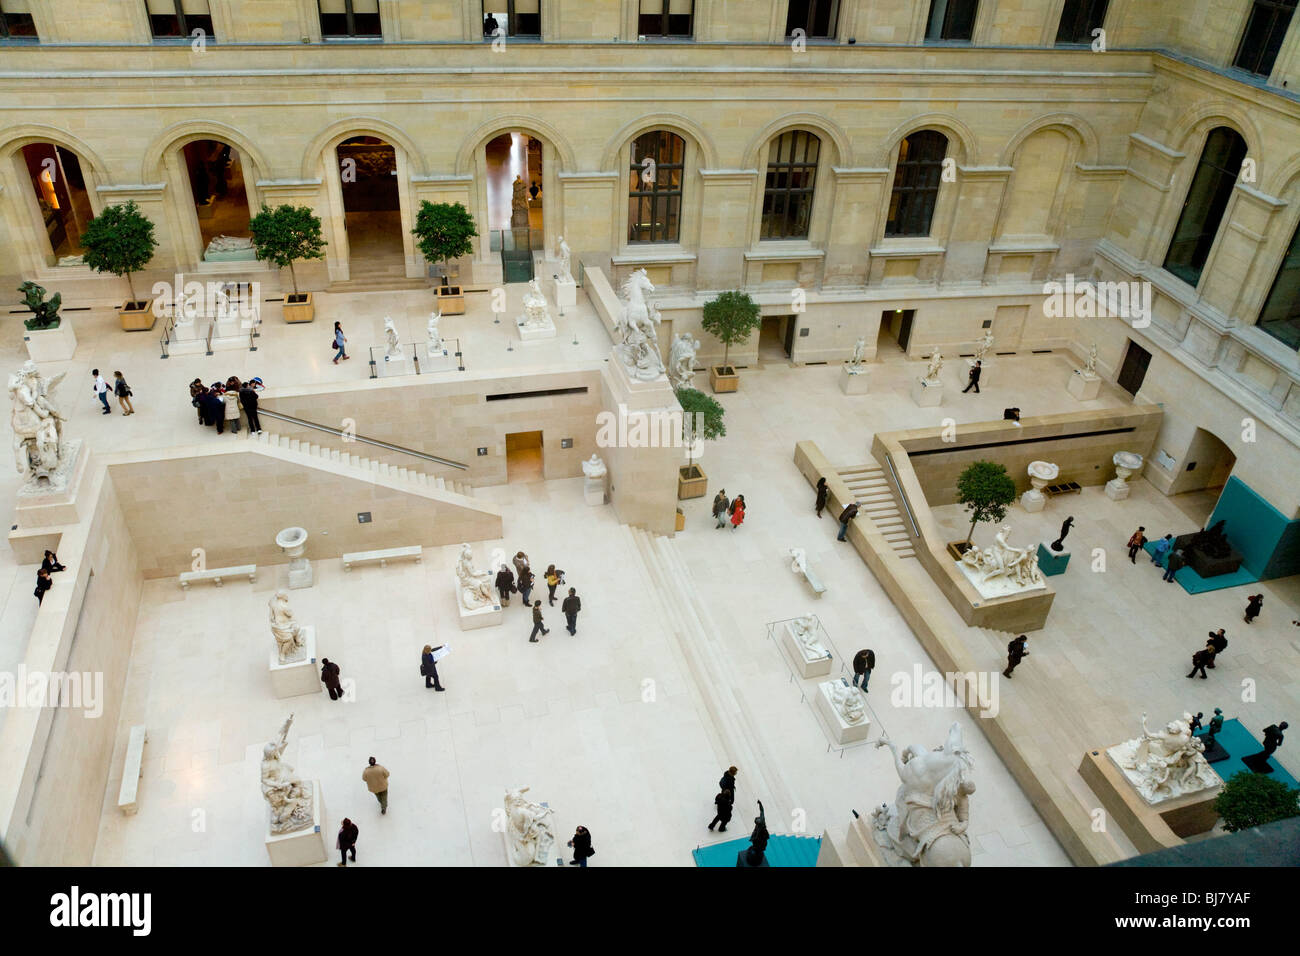 Internal courtyard of The Louvre Museum / Musee / Palais du Louvre. Paris, France. Stock Photo